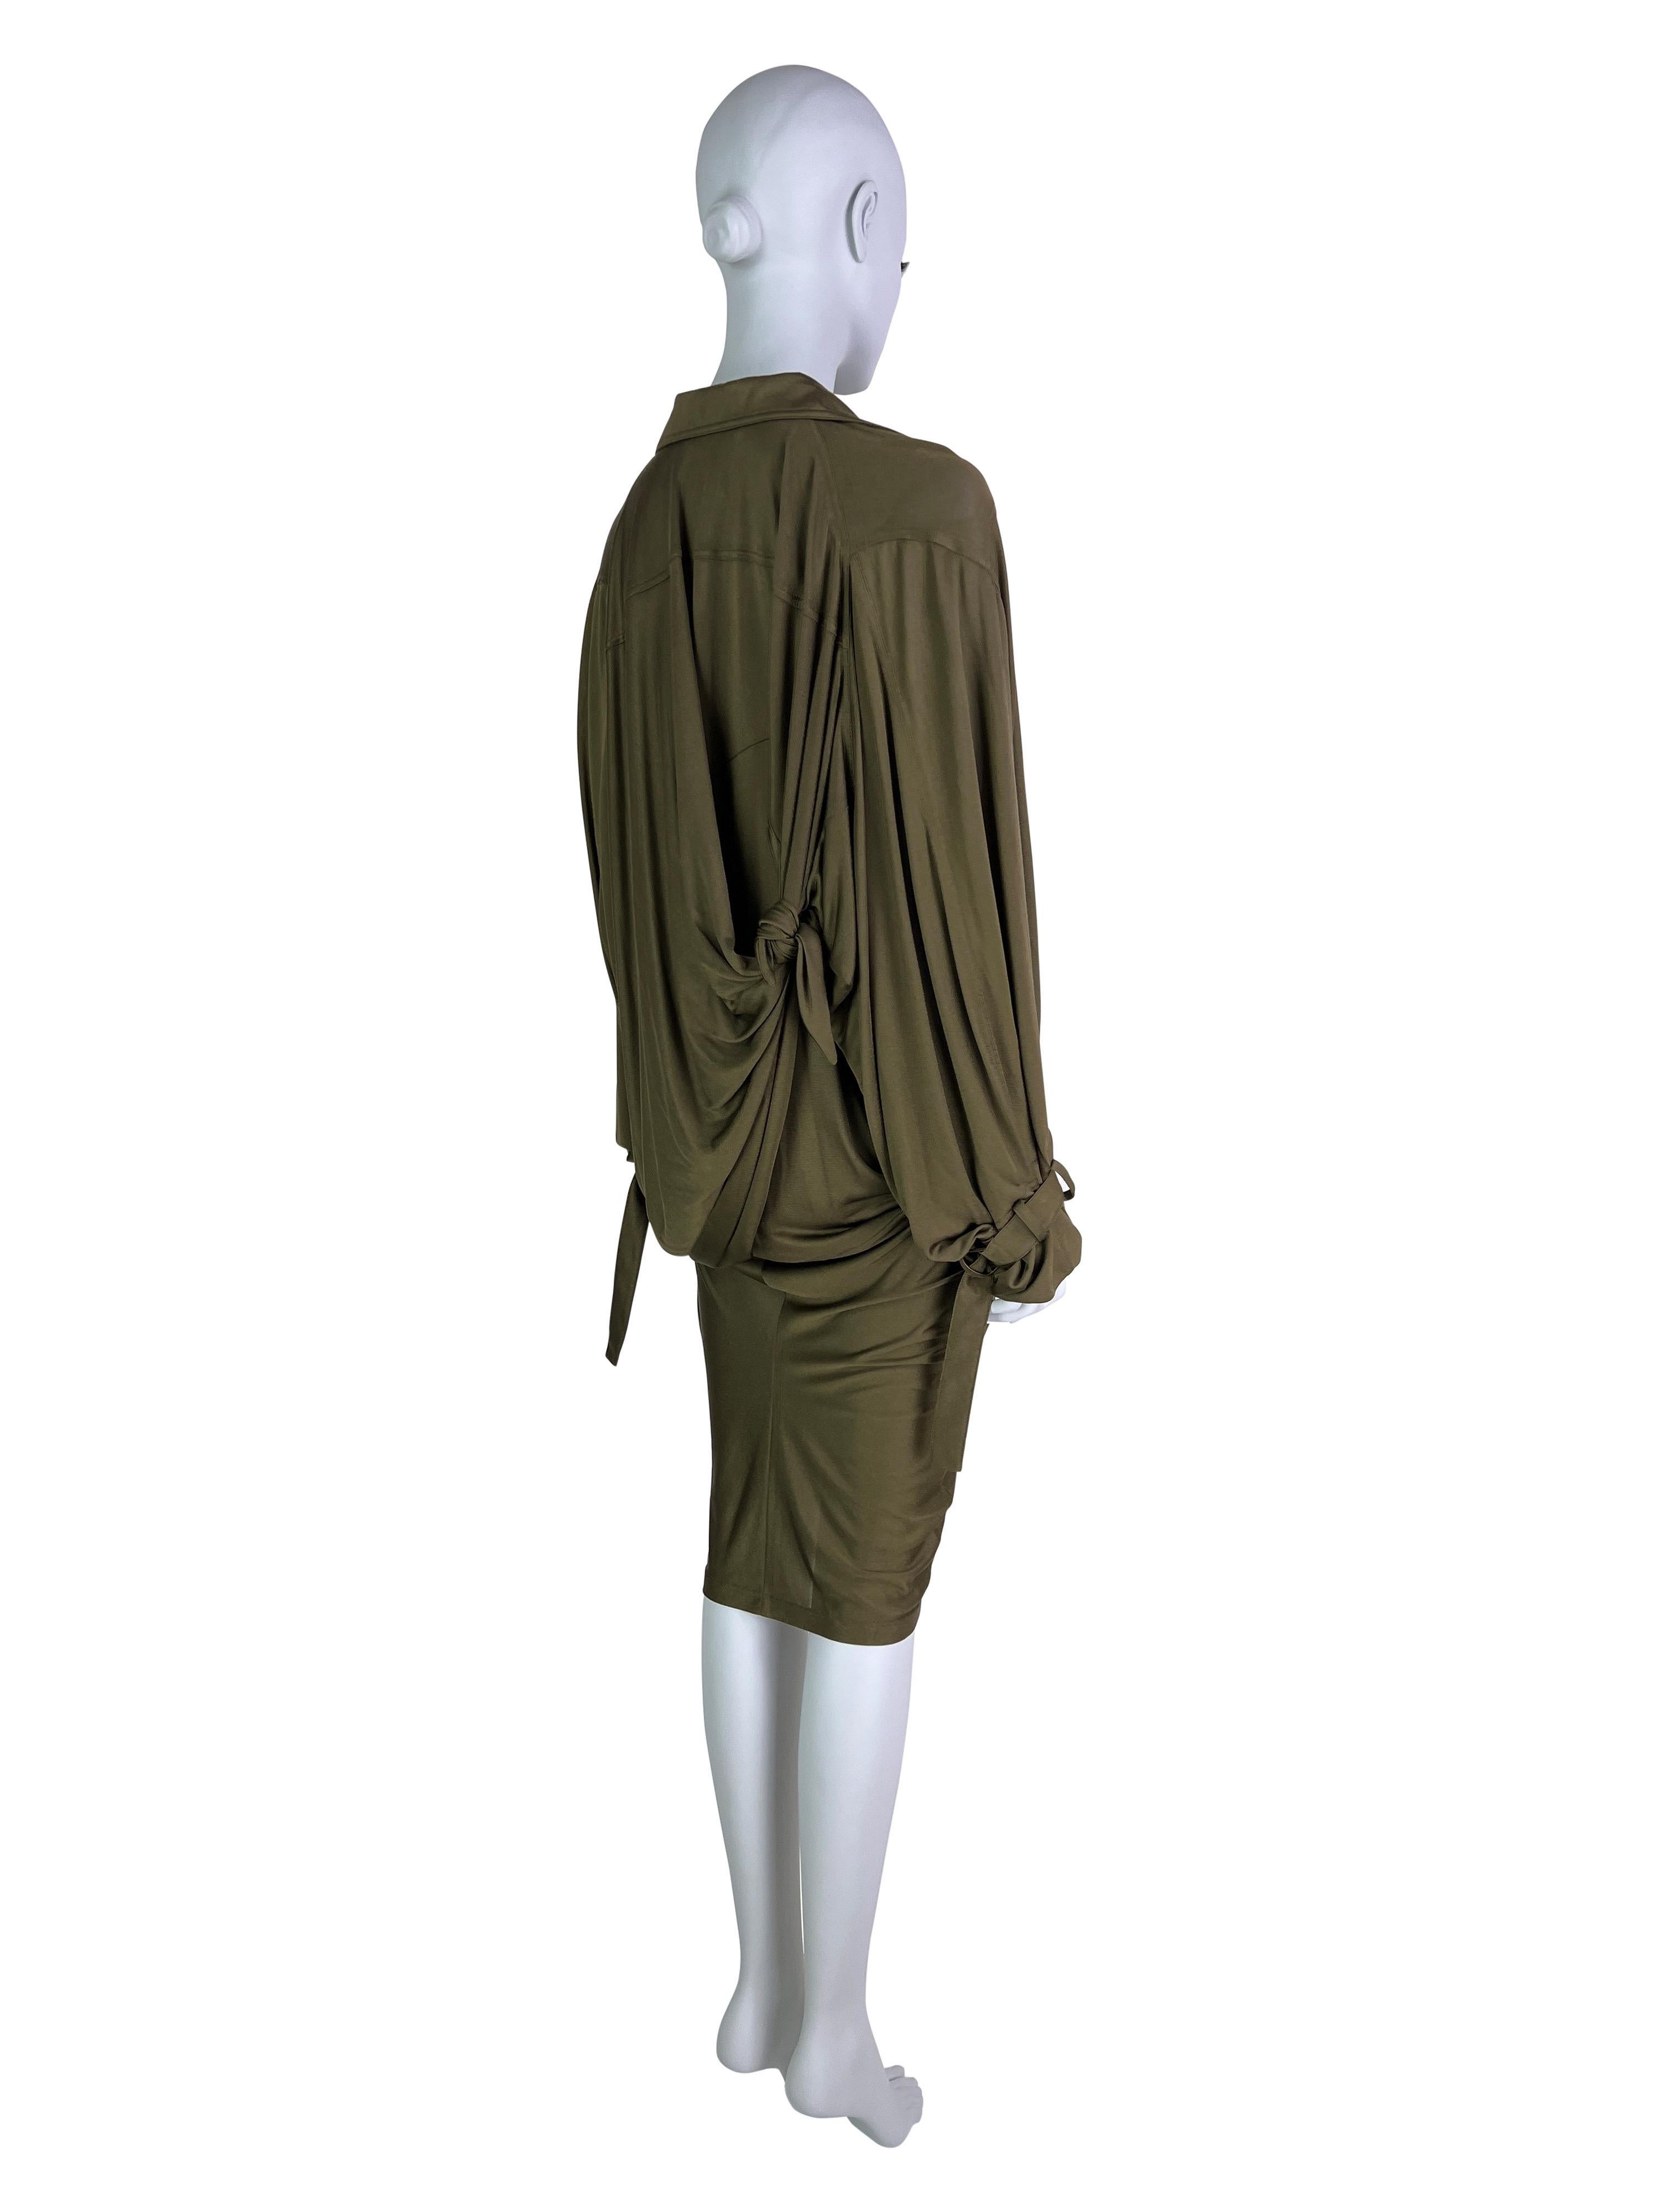 Women's SS 2003 Dior by John Galliano RTW Silk Dress For Sale